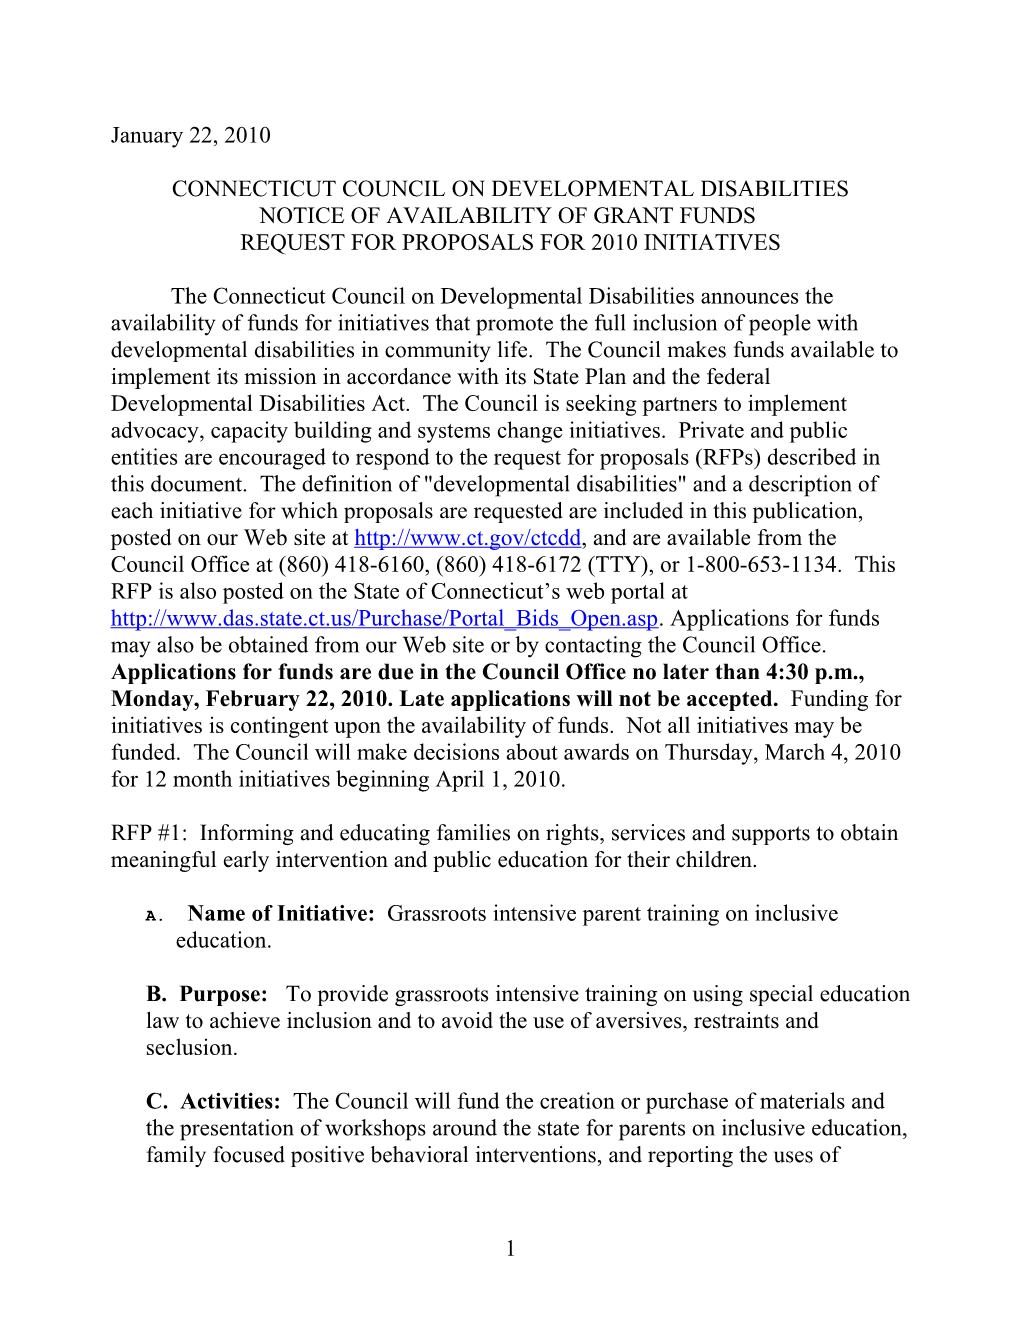 Connecticut Council On Developmental Disabilities